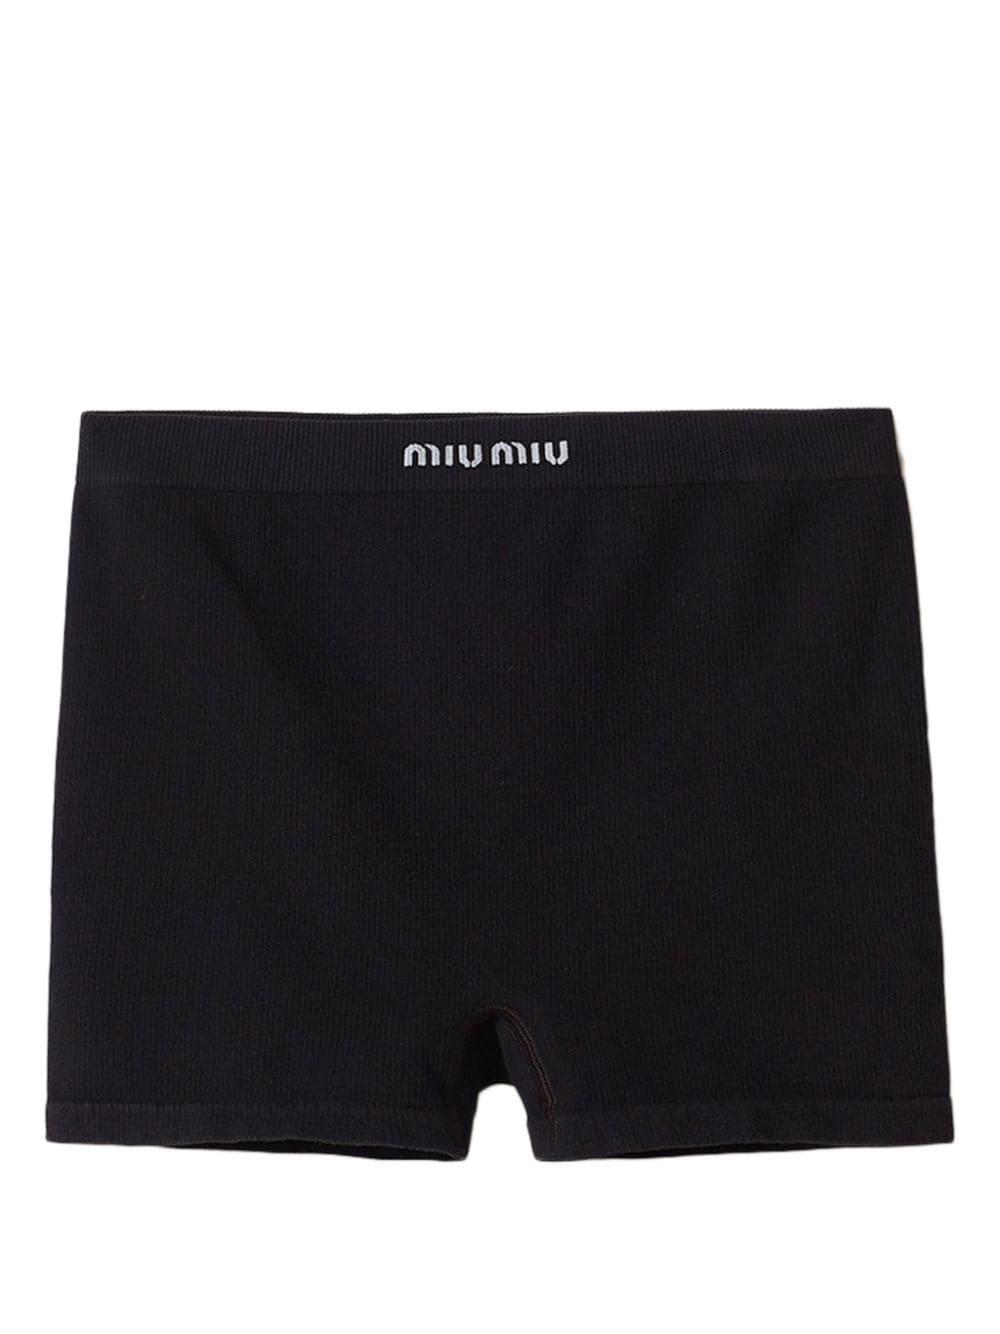 Miu Miu Seamless Ribbed Cotton Boxers in Black